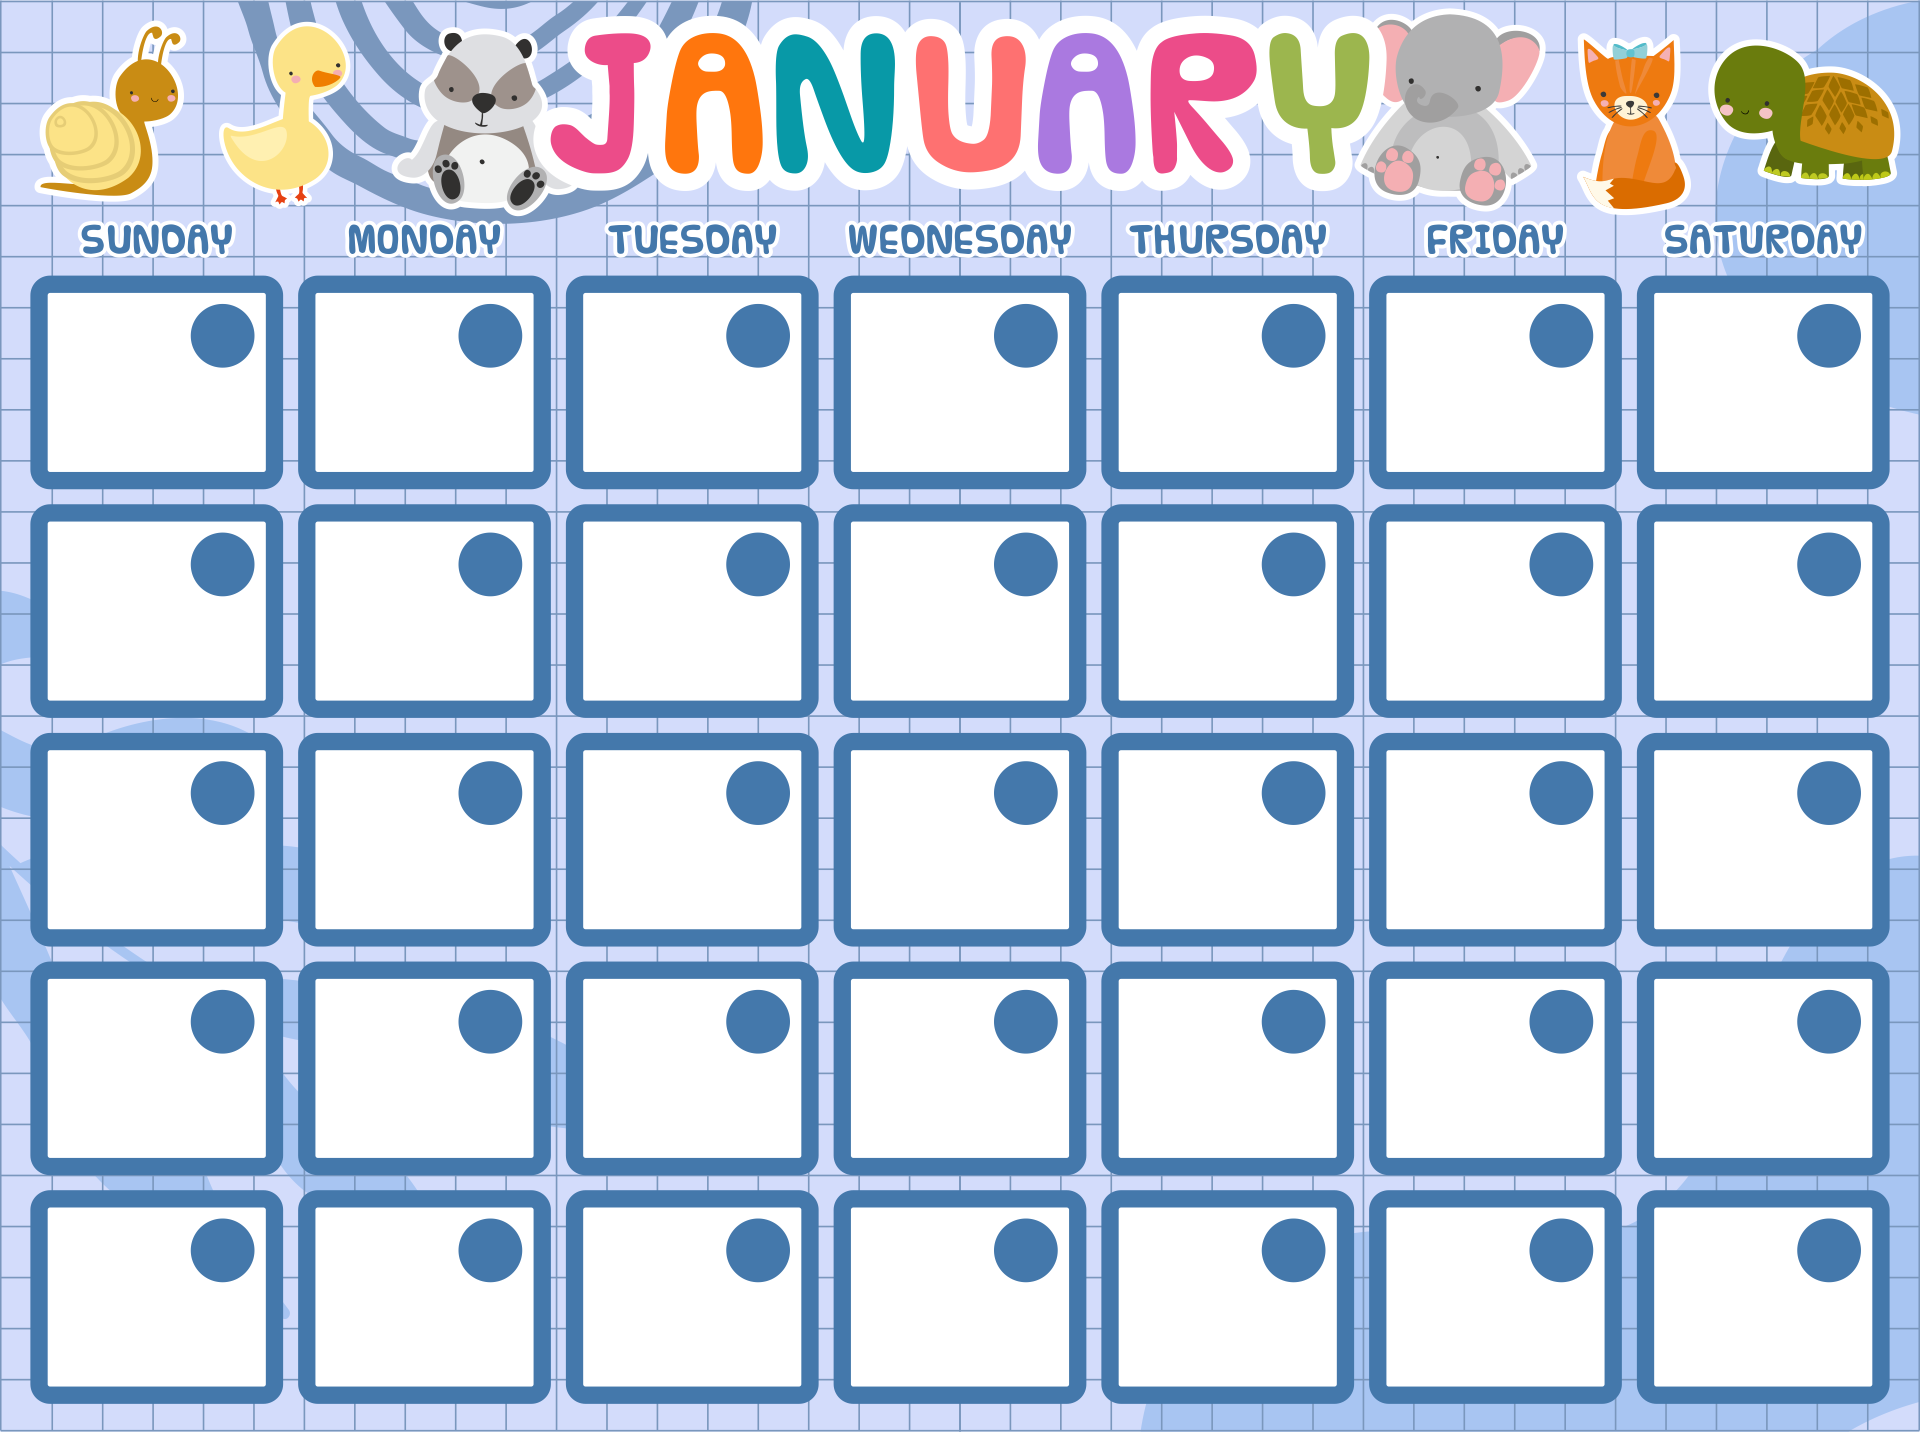 Cute Monthly Calendar Printable